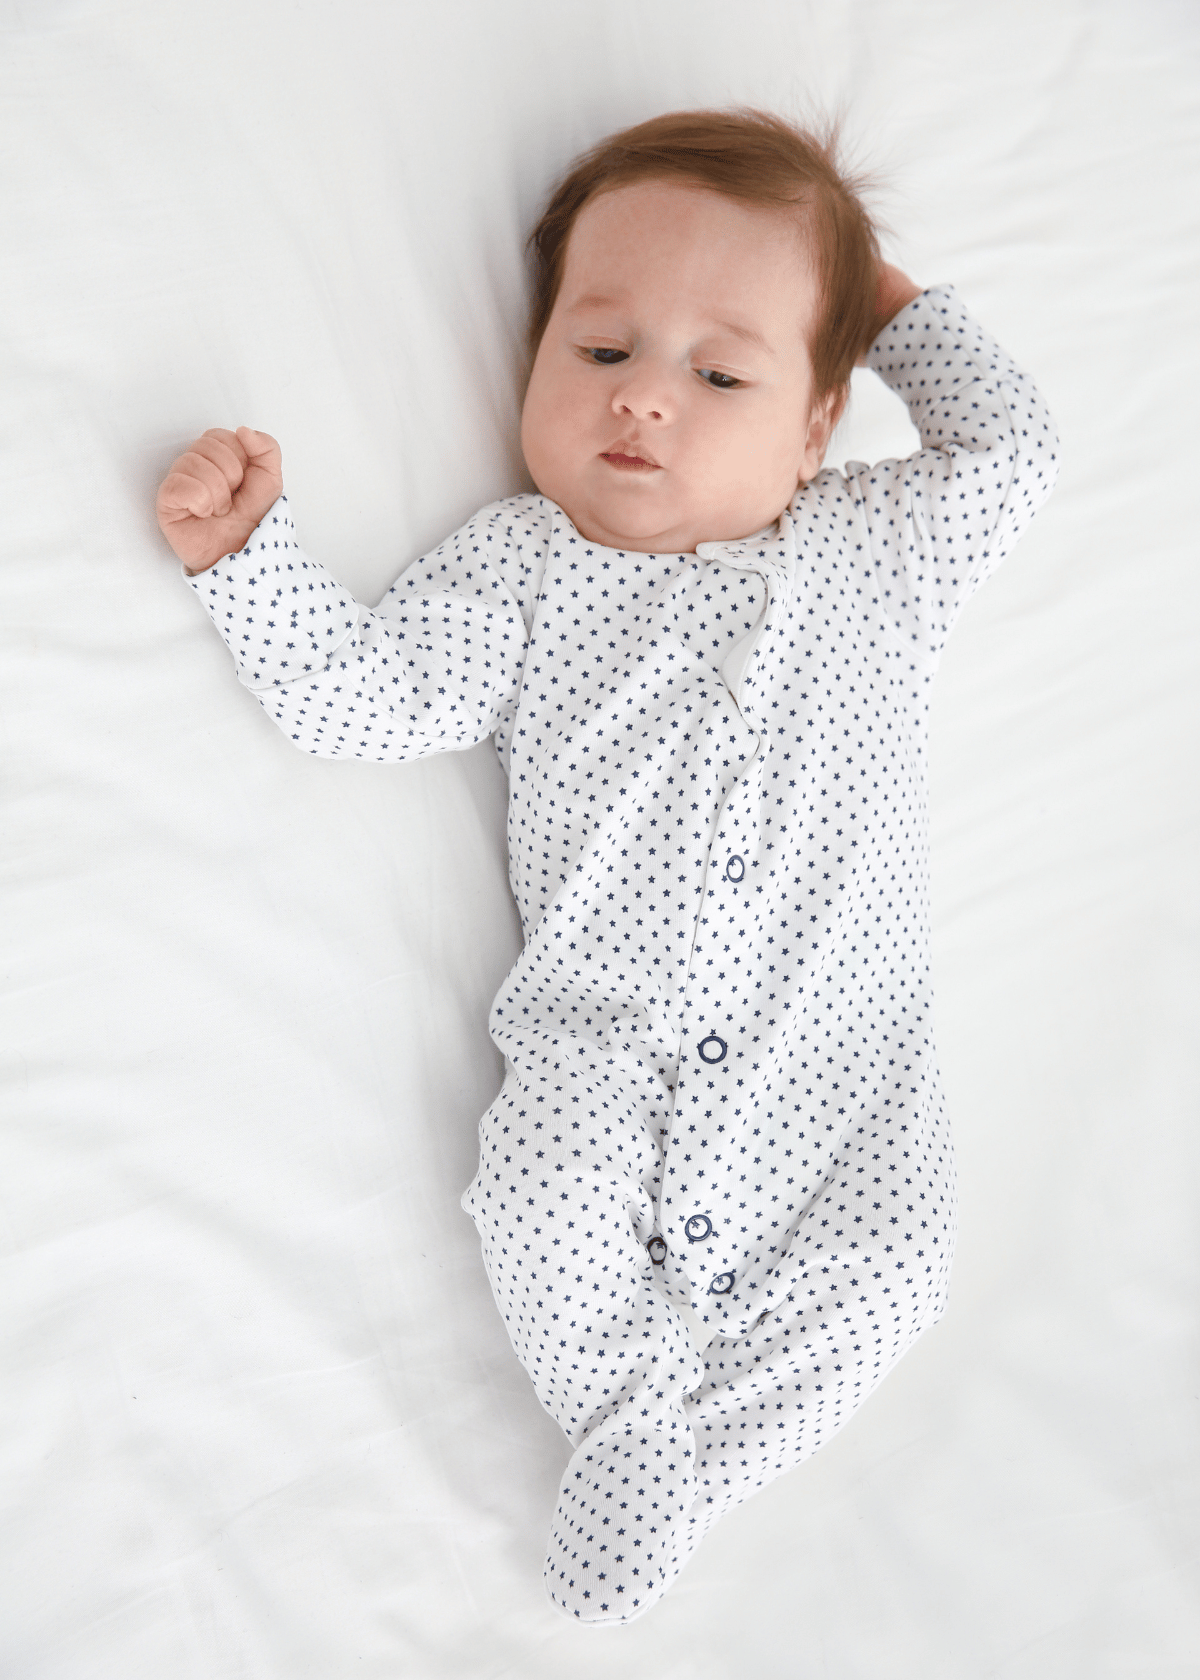 Snug as a Bug: Get Your Baby Bamboo Footie Pajamas